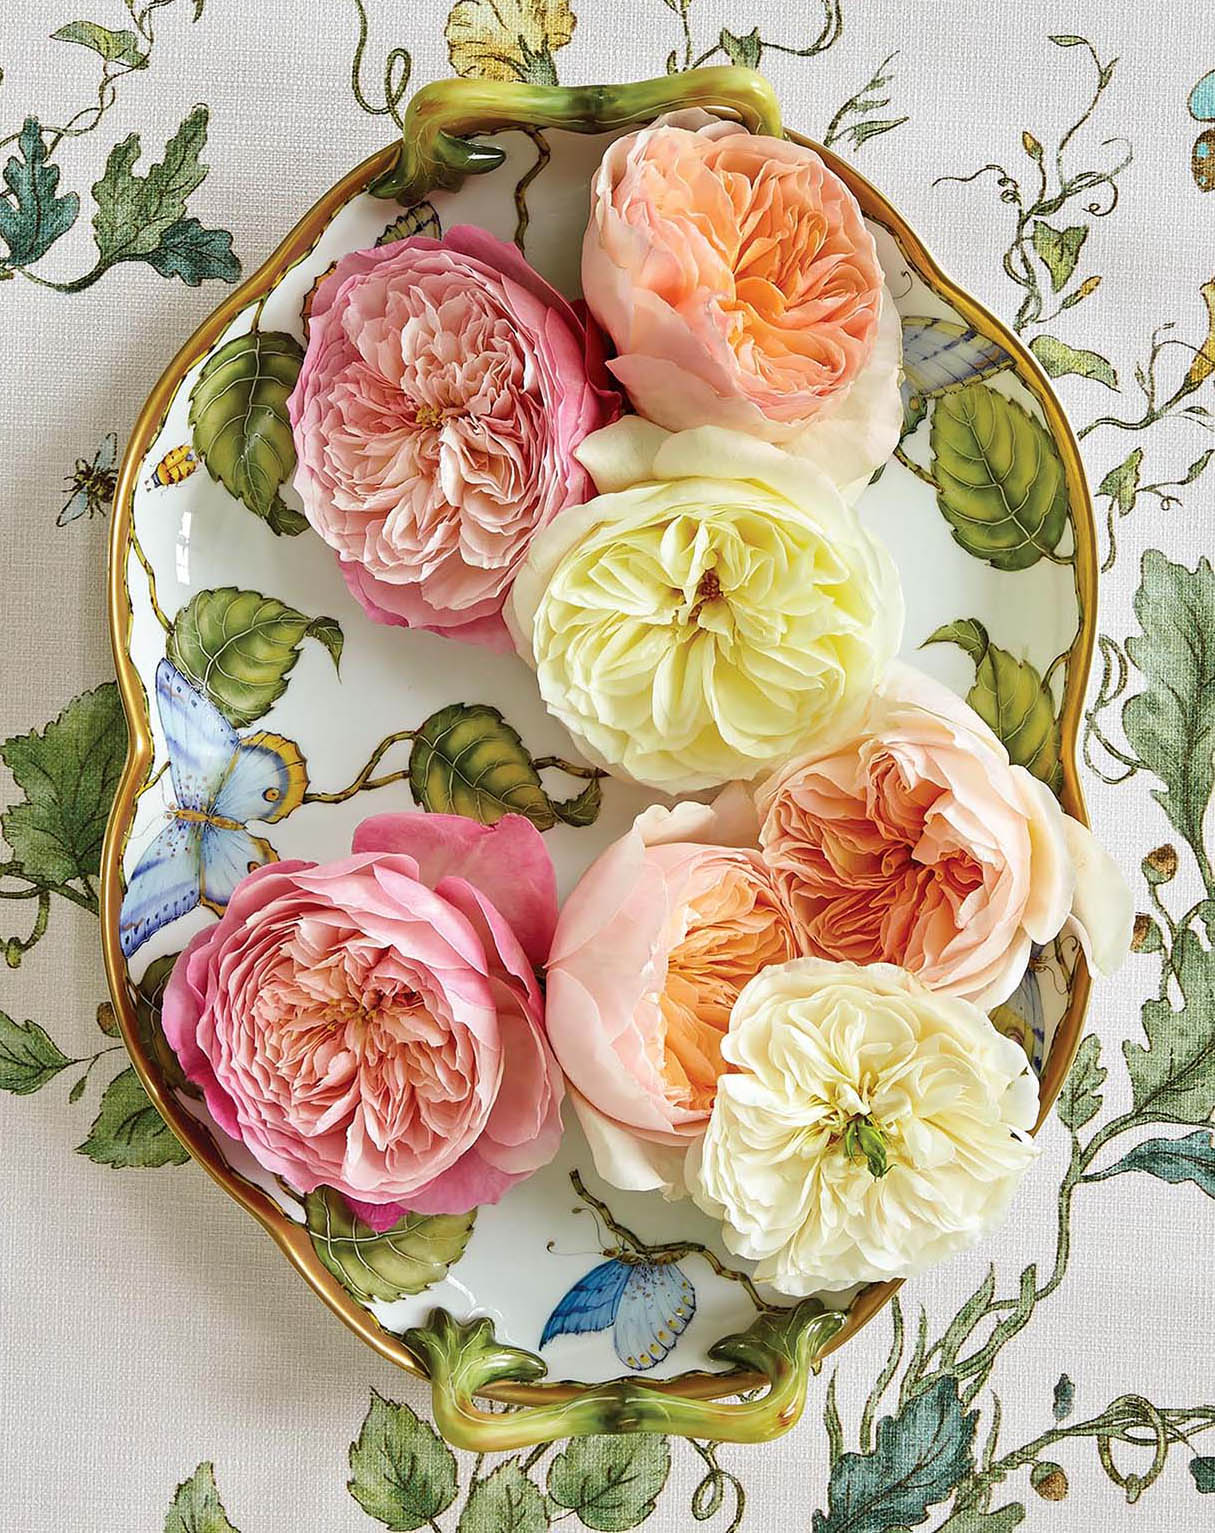 Fluffy pink and orange roses on a floral platter.